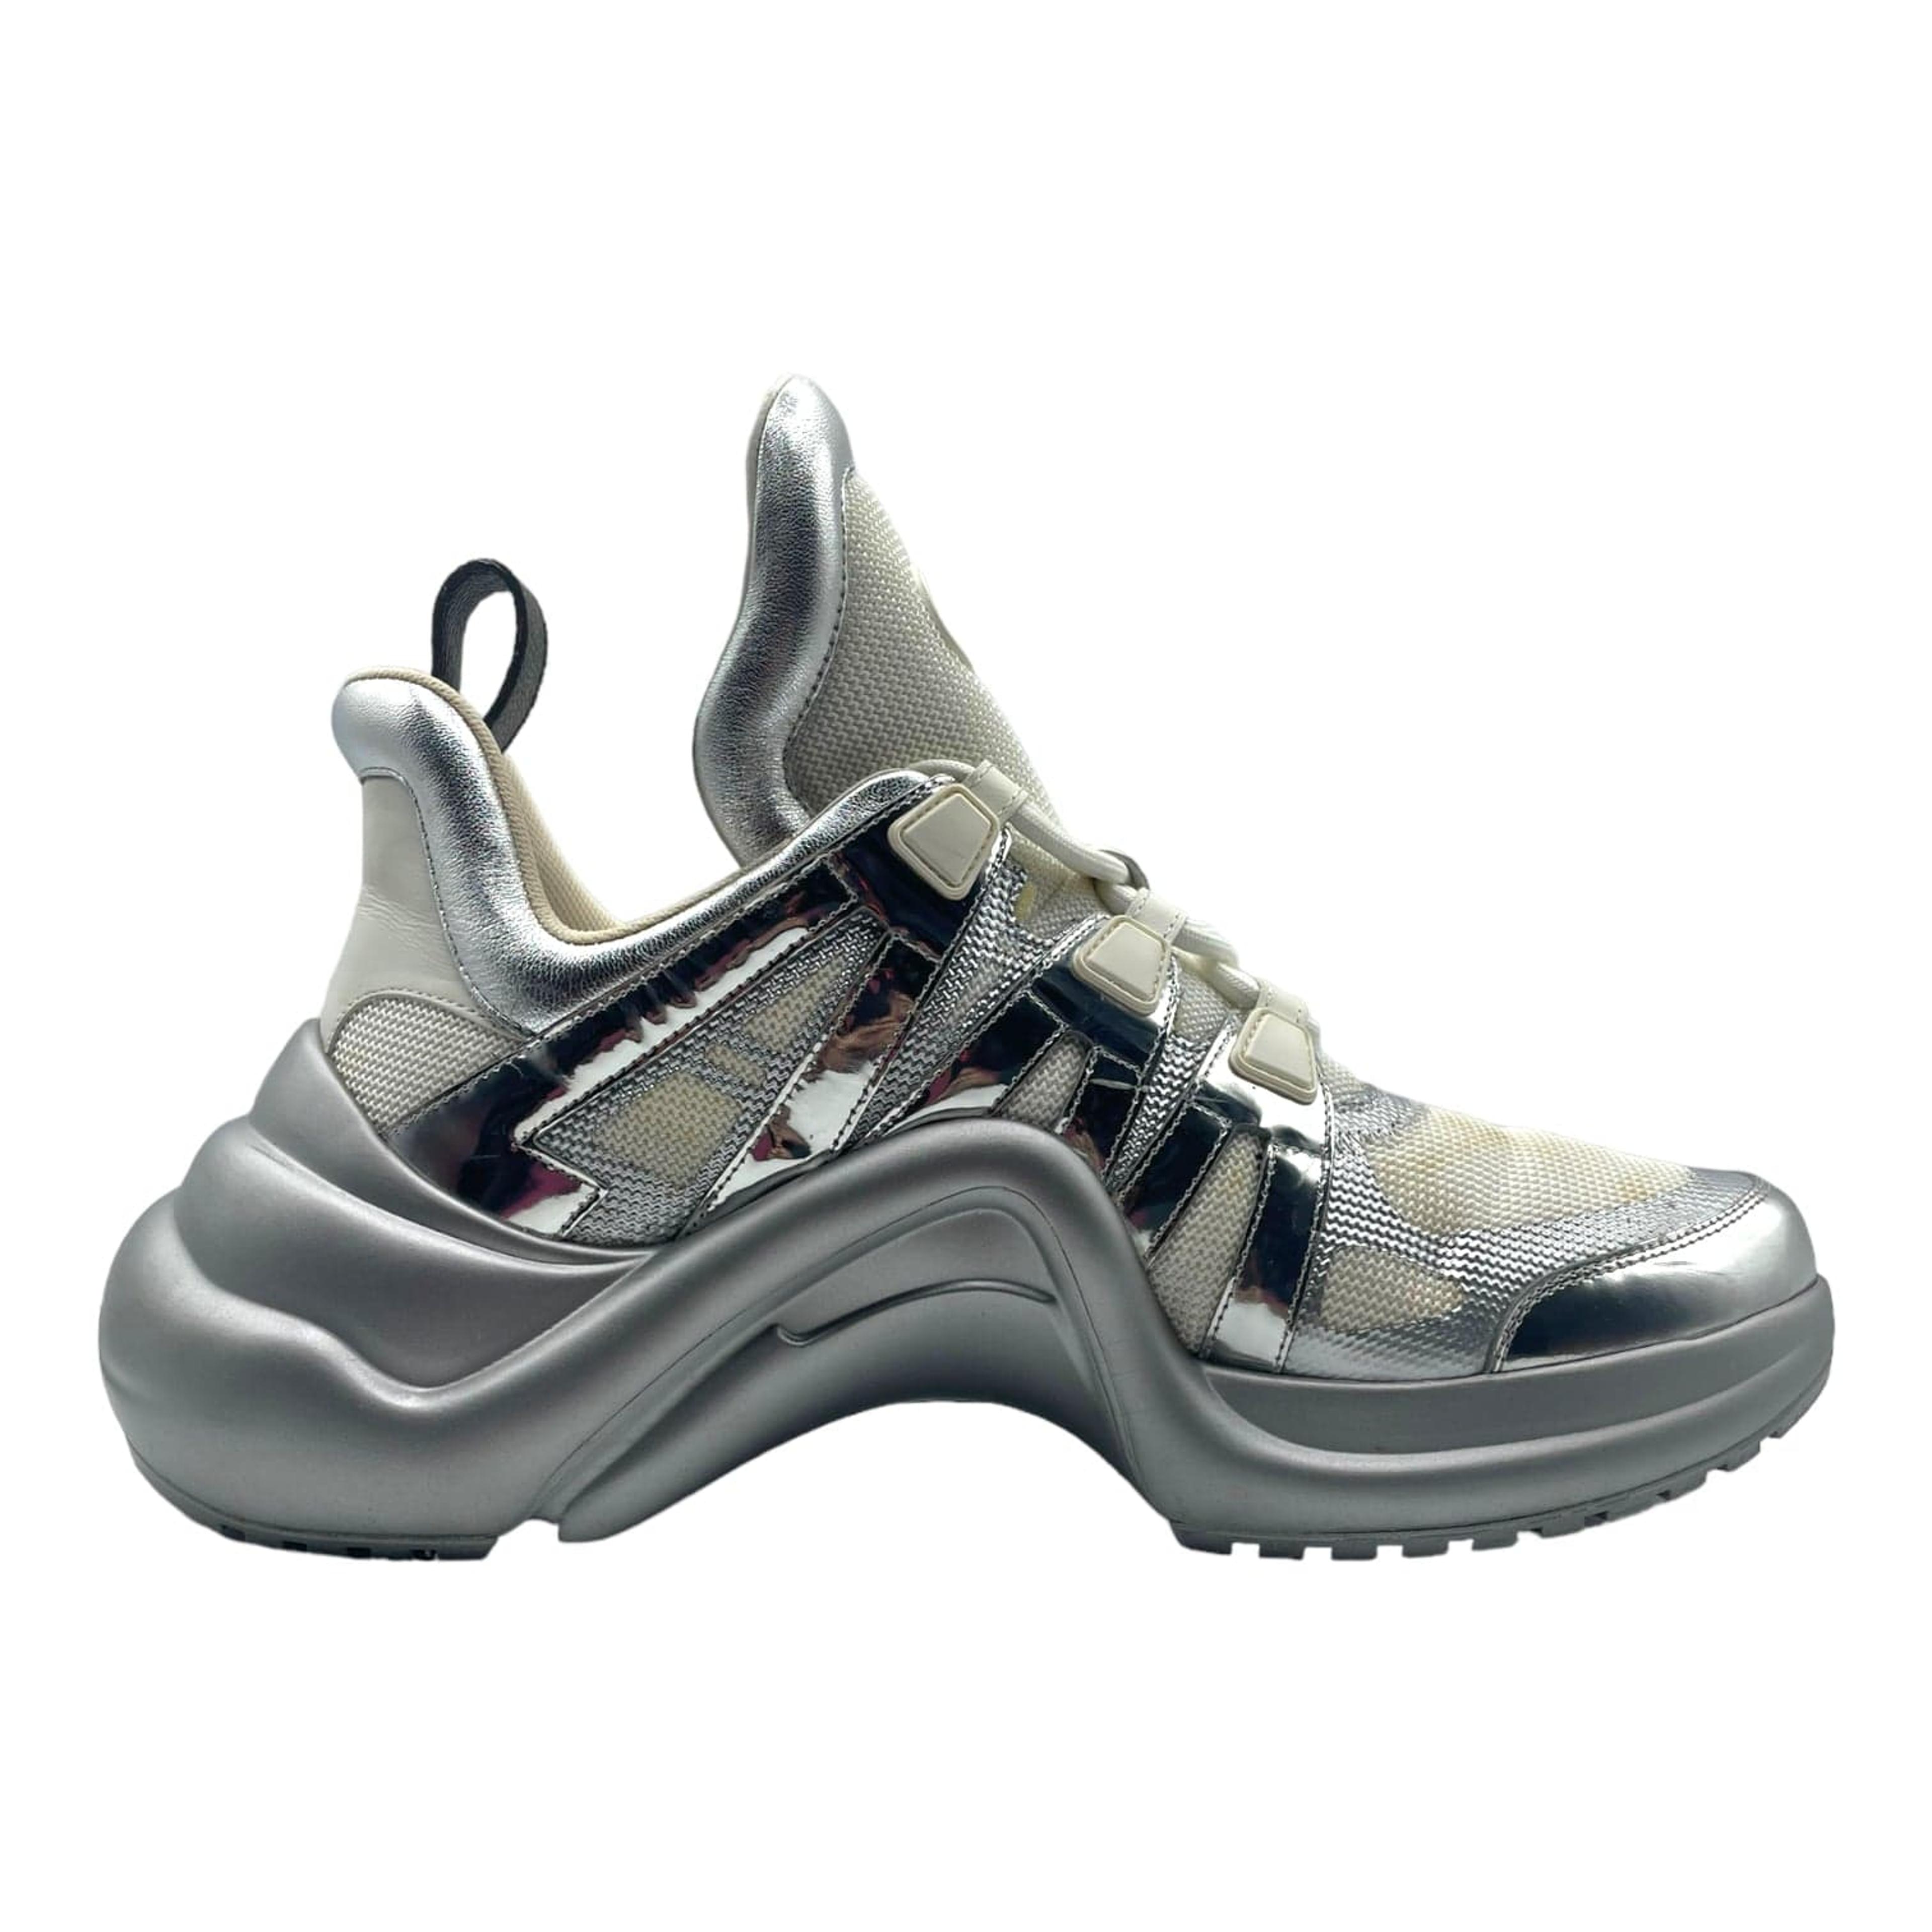 NTWRK - Louis Vuitton Archlight Sneaker Metallic Silver Pre-Owned